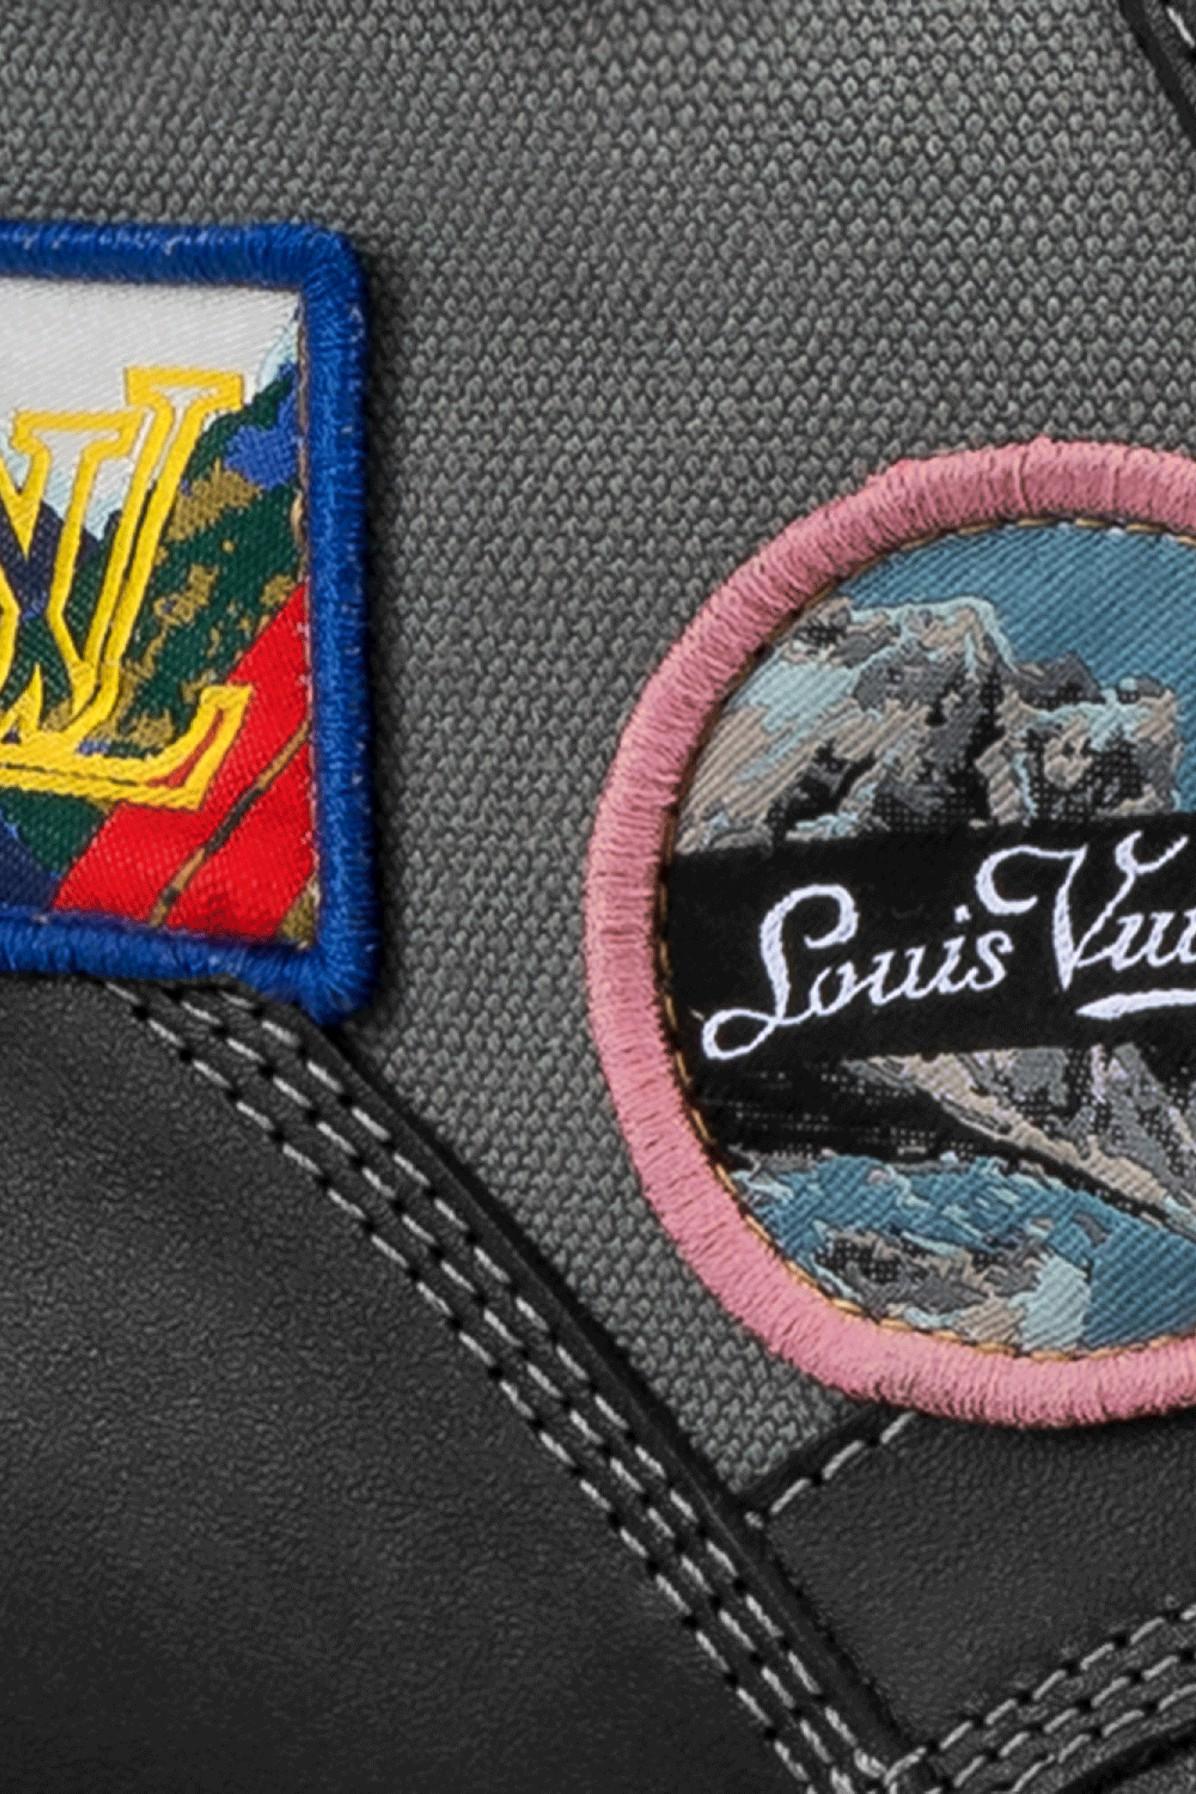 Louis Vuitton Oberkampf Graphic Lace-Up Ankle Boots